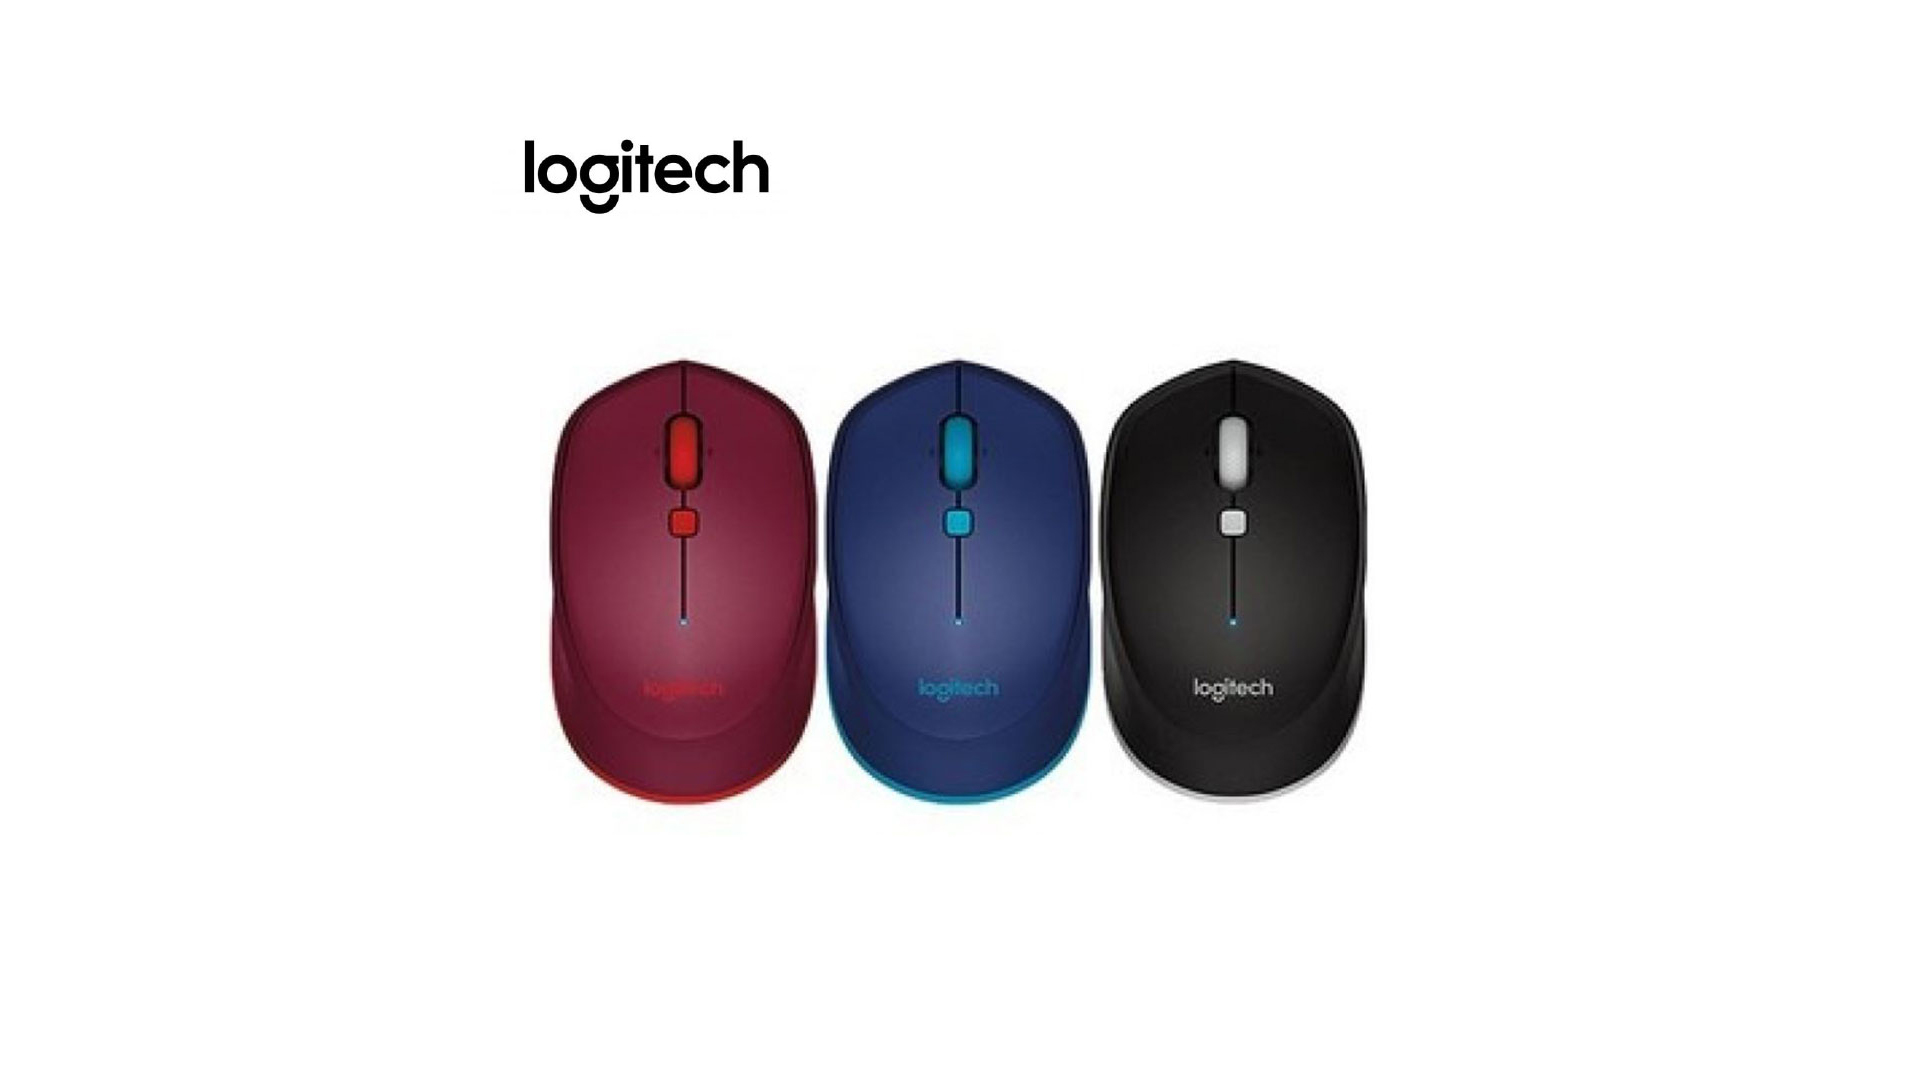 Logitech M337 Wireless Mouse